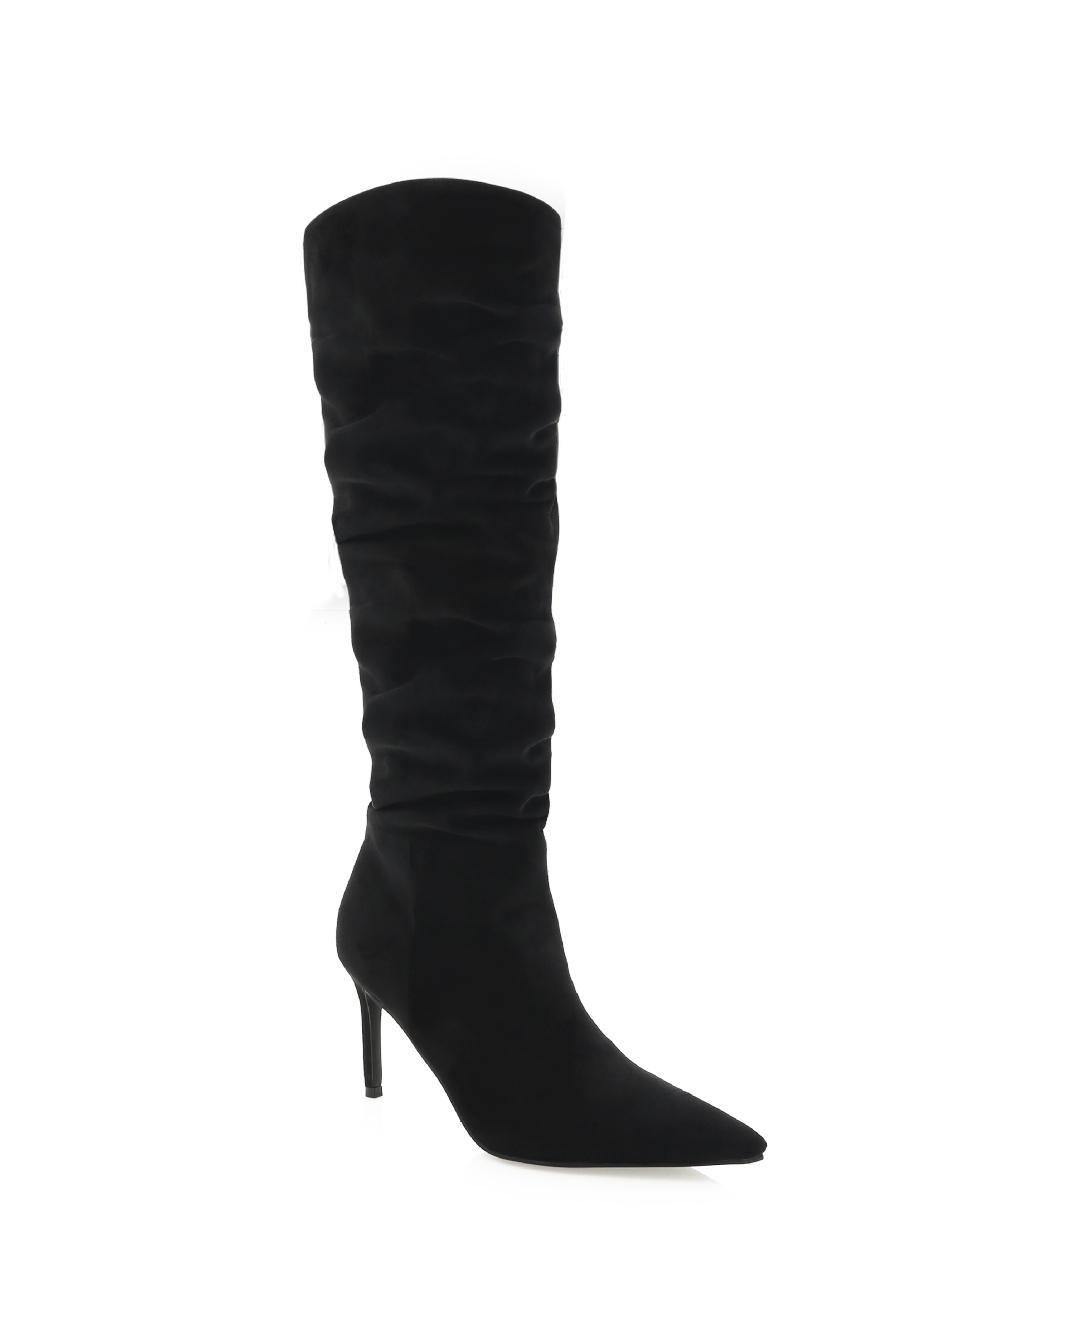 RAISA - BLACK SUEDE-Boots-Billini-Billini